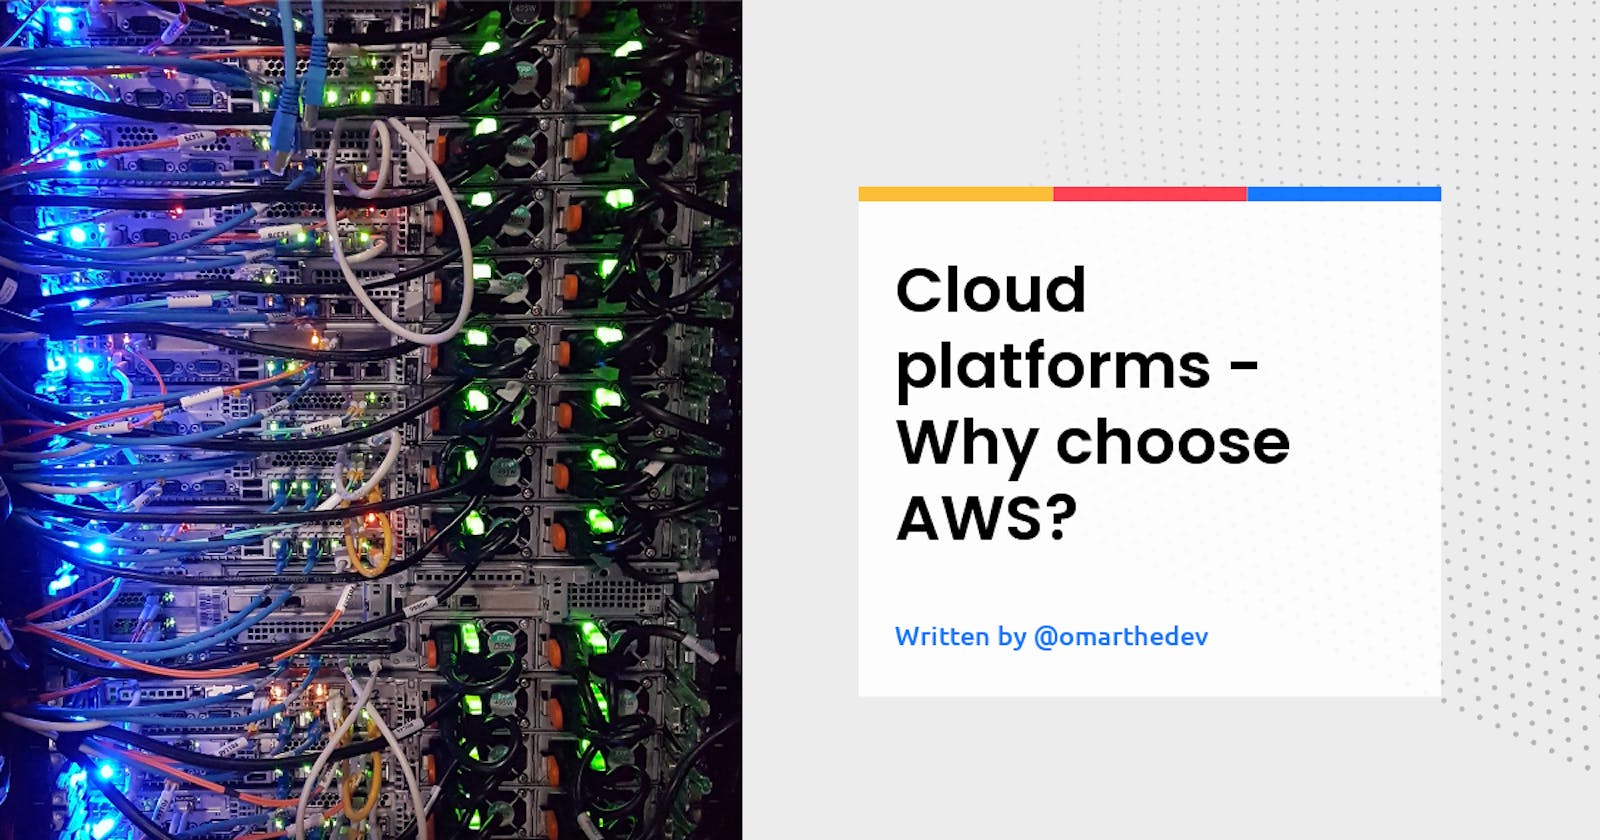 Cloud platforms - Why choose AWS?